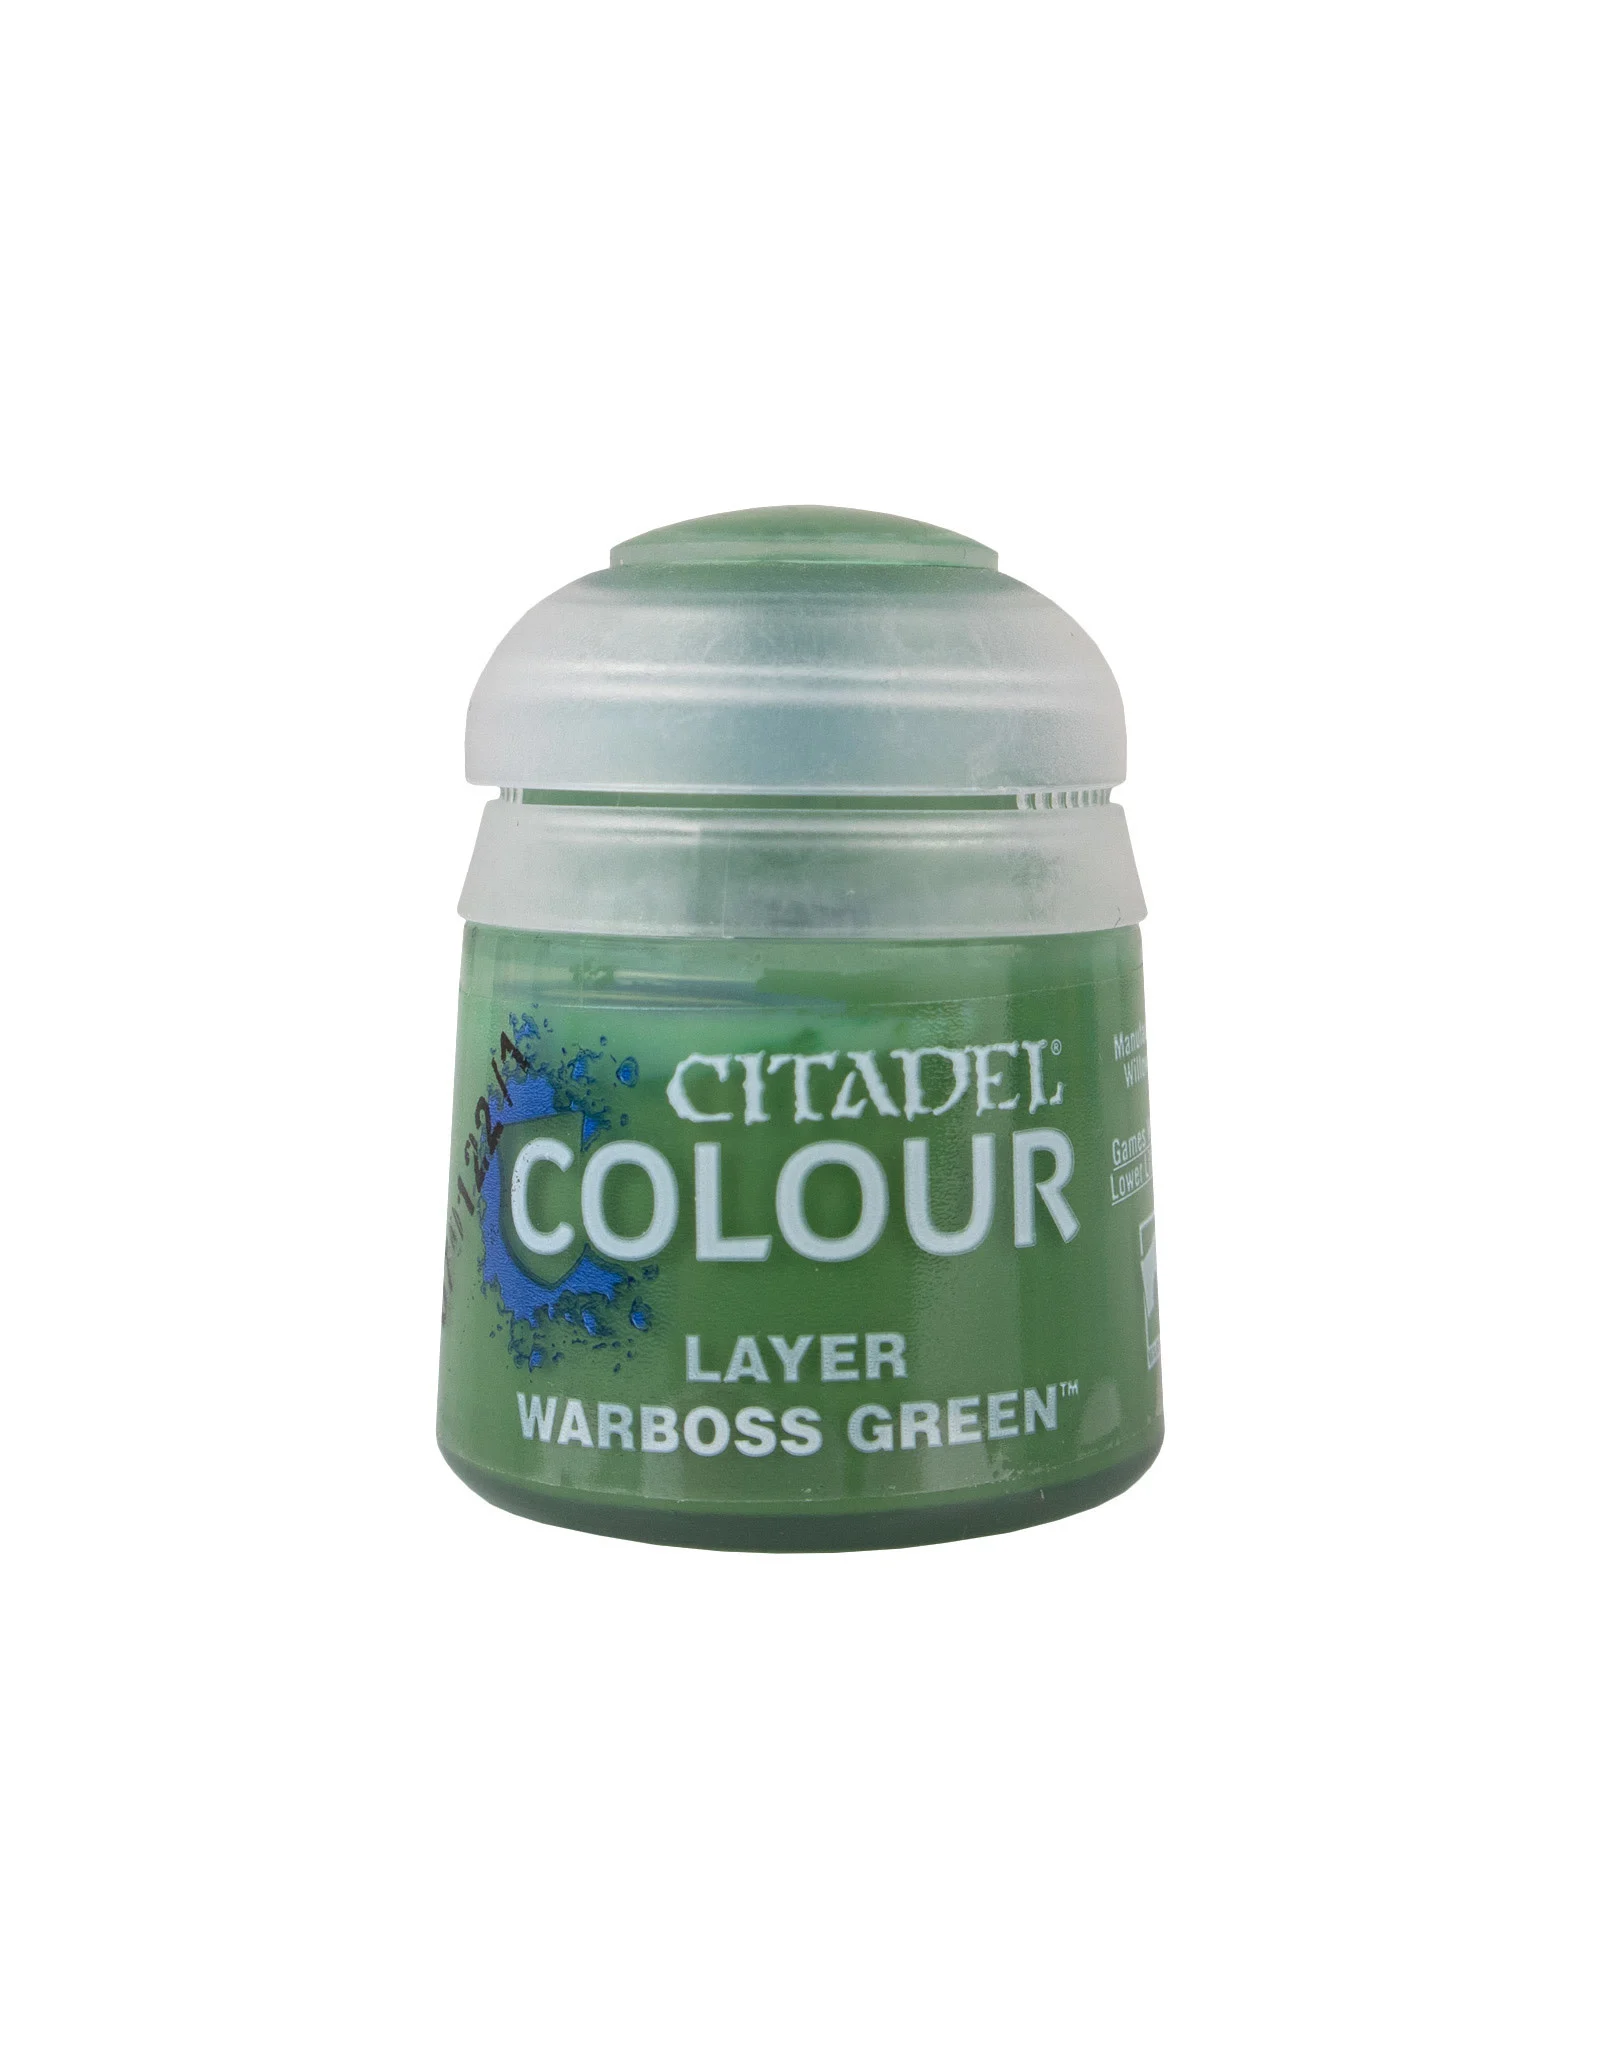 Citadel Colour – Layer – Warboss Green